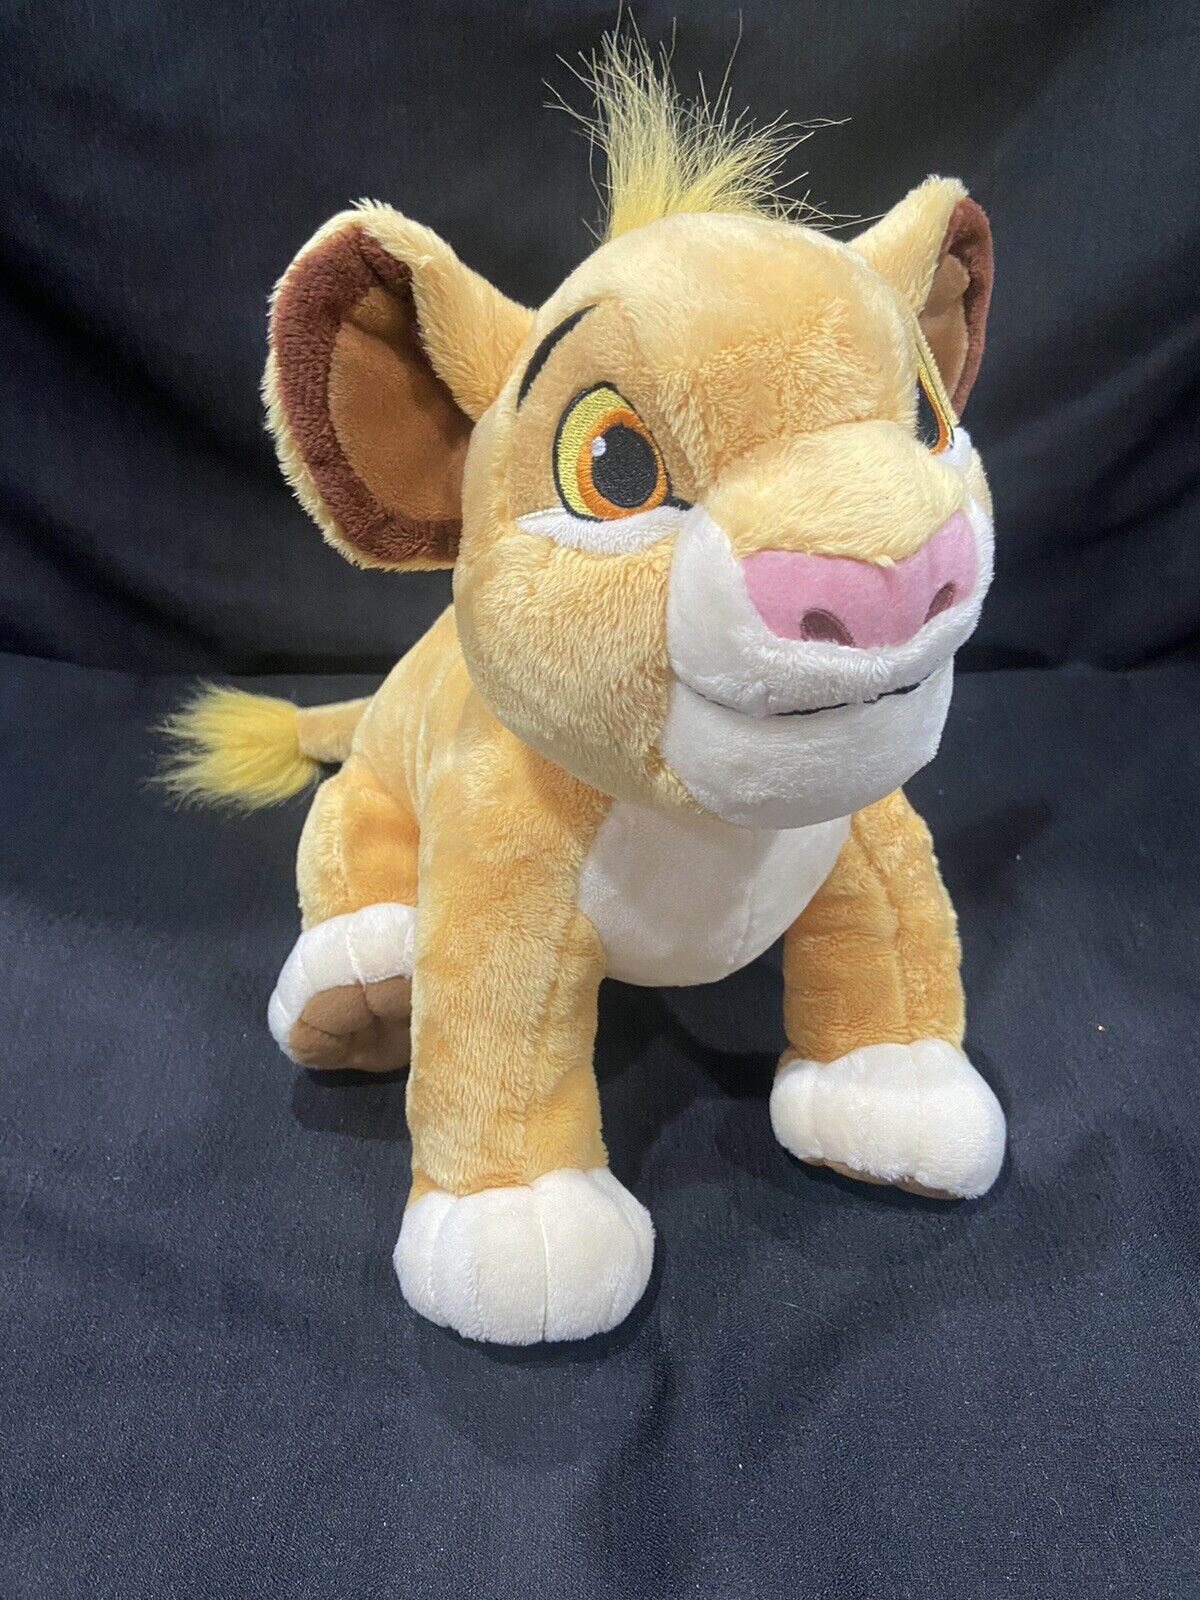 Vintage Disney Store Exclusive The Lion King Simba Plush Stuffed Toy 15” CLEAN